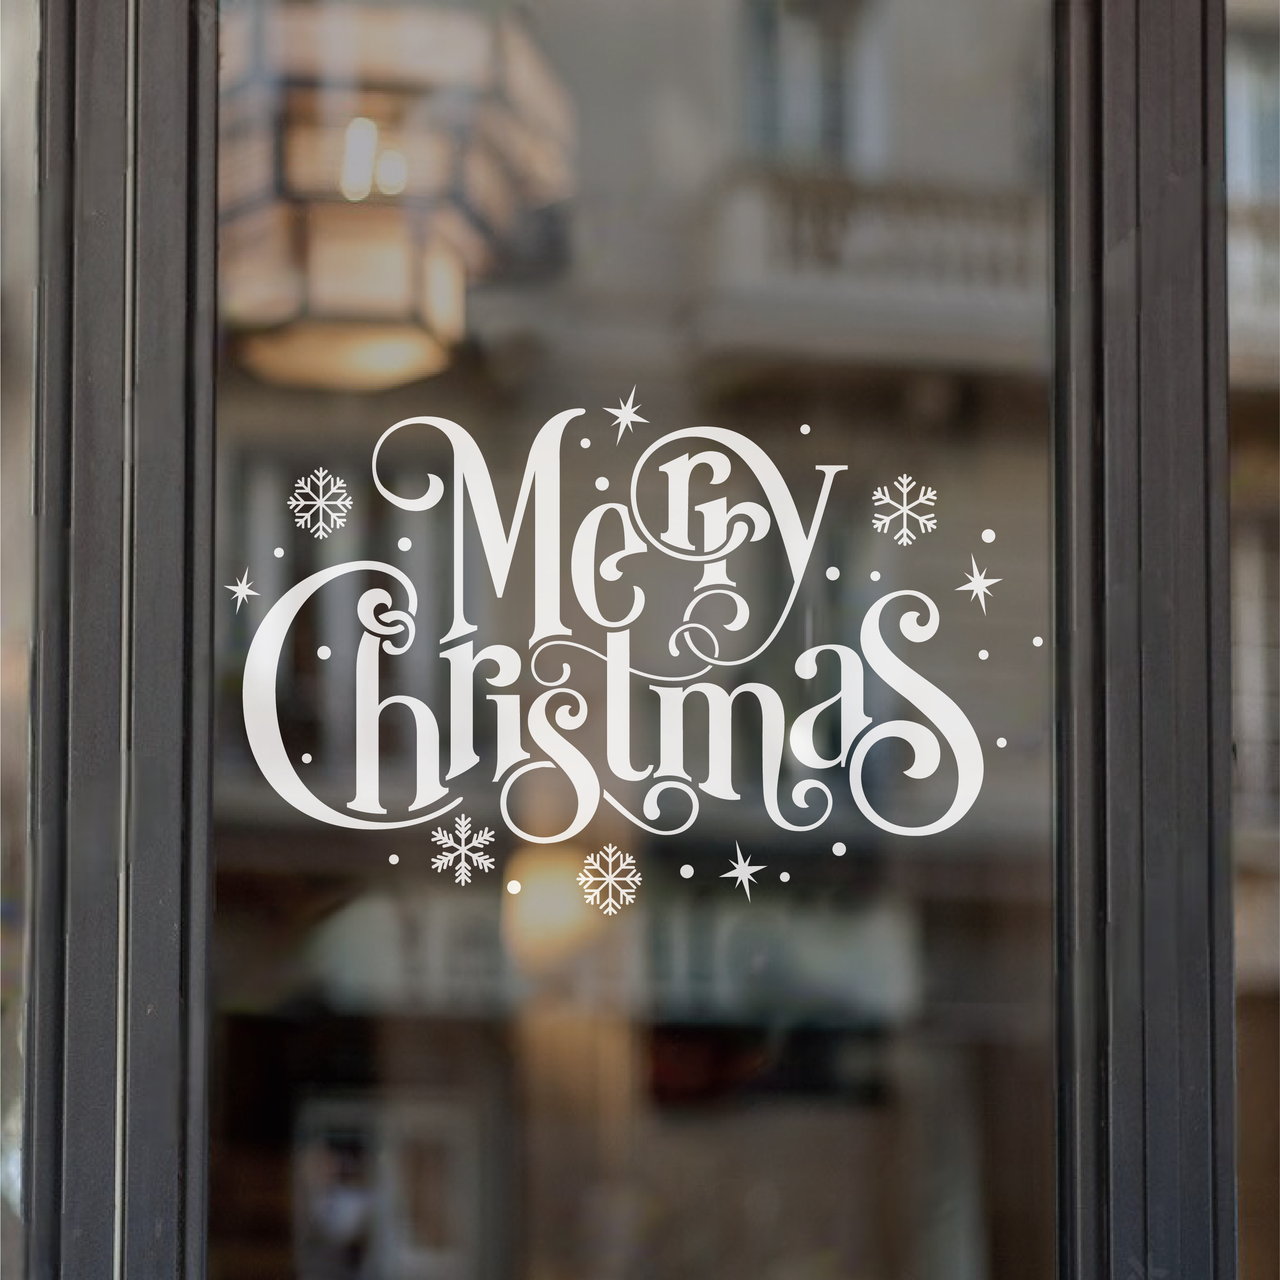 Merry Christmas - Festive Window Decal